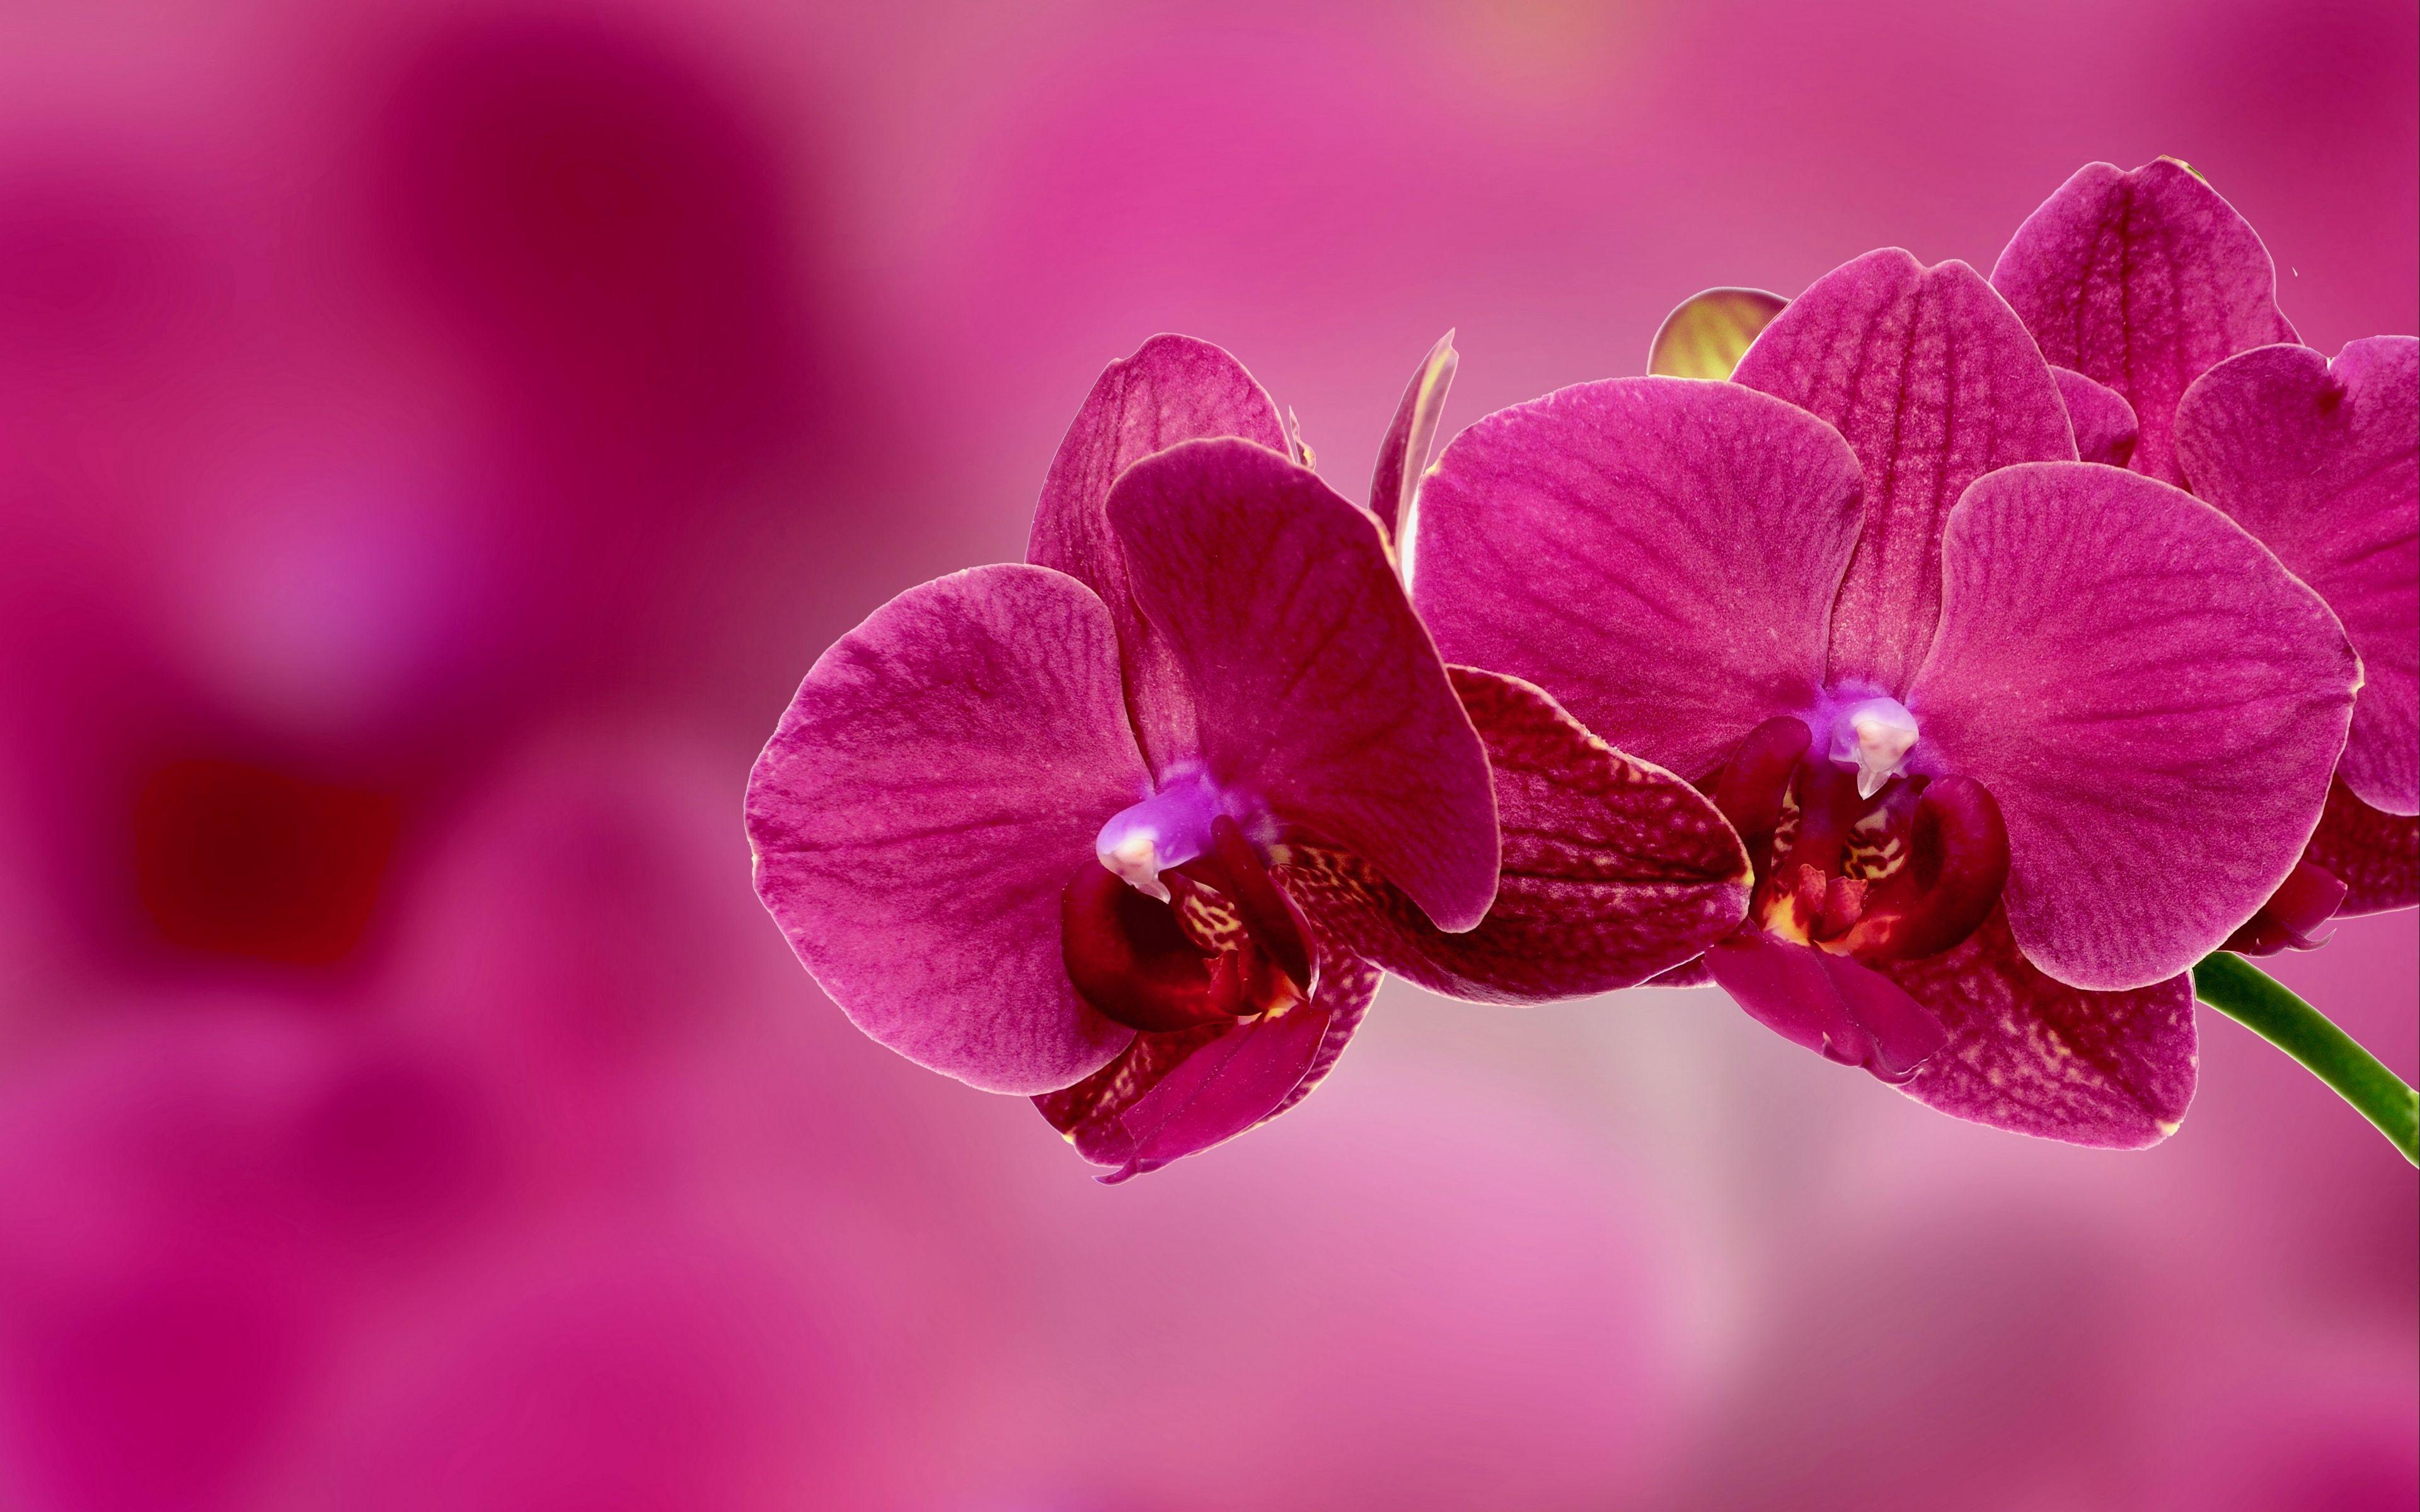 Download wallpaper 3840x2400 orchid, flower, petals, pink 4k ultra